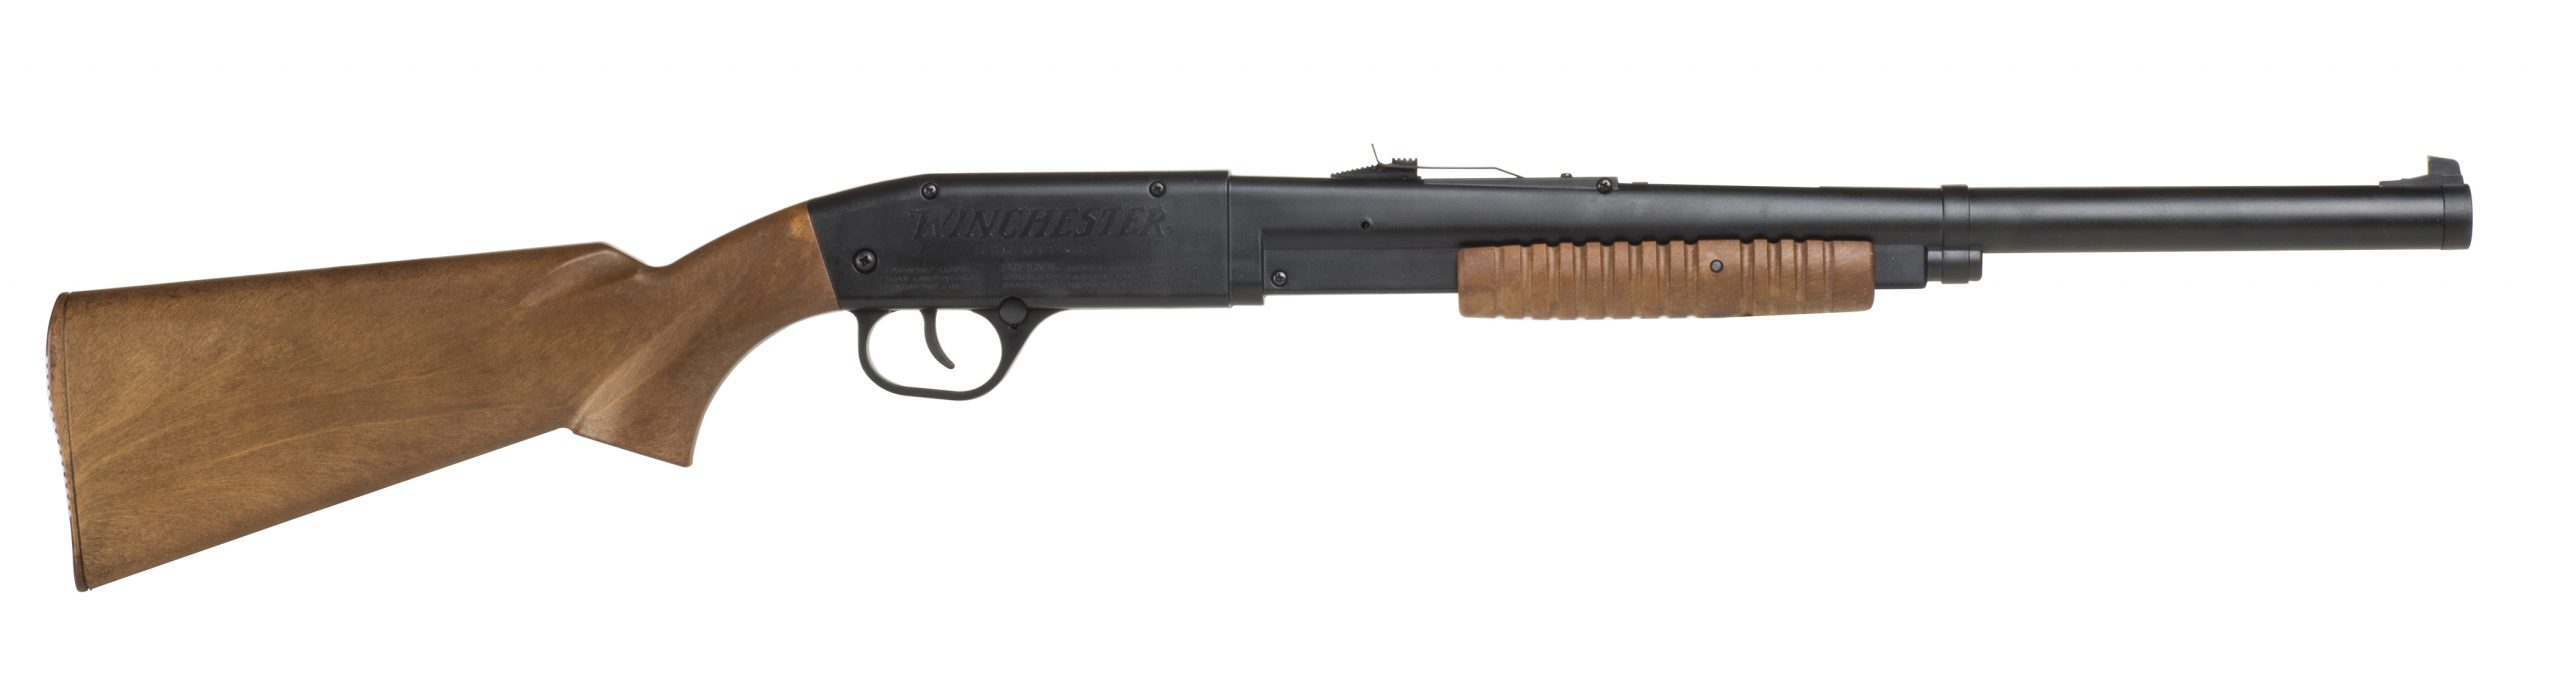 New Winchester Air Rifles Model Pump Bb Gun Just Like Dad S Duck Gun Airgun Wire